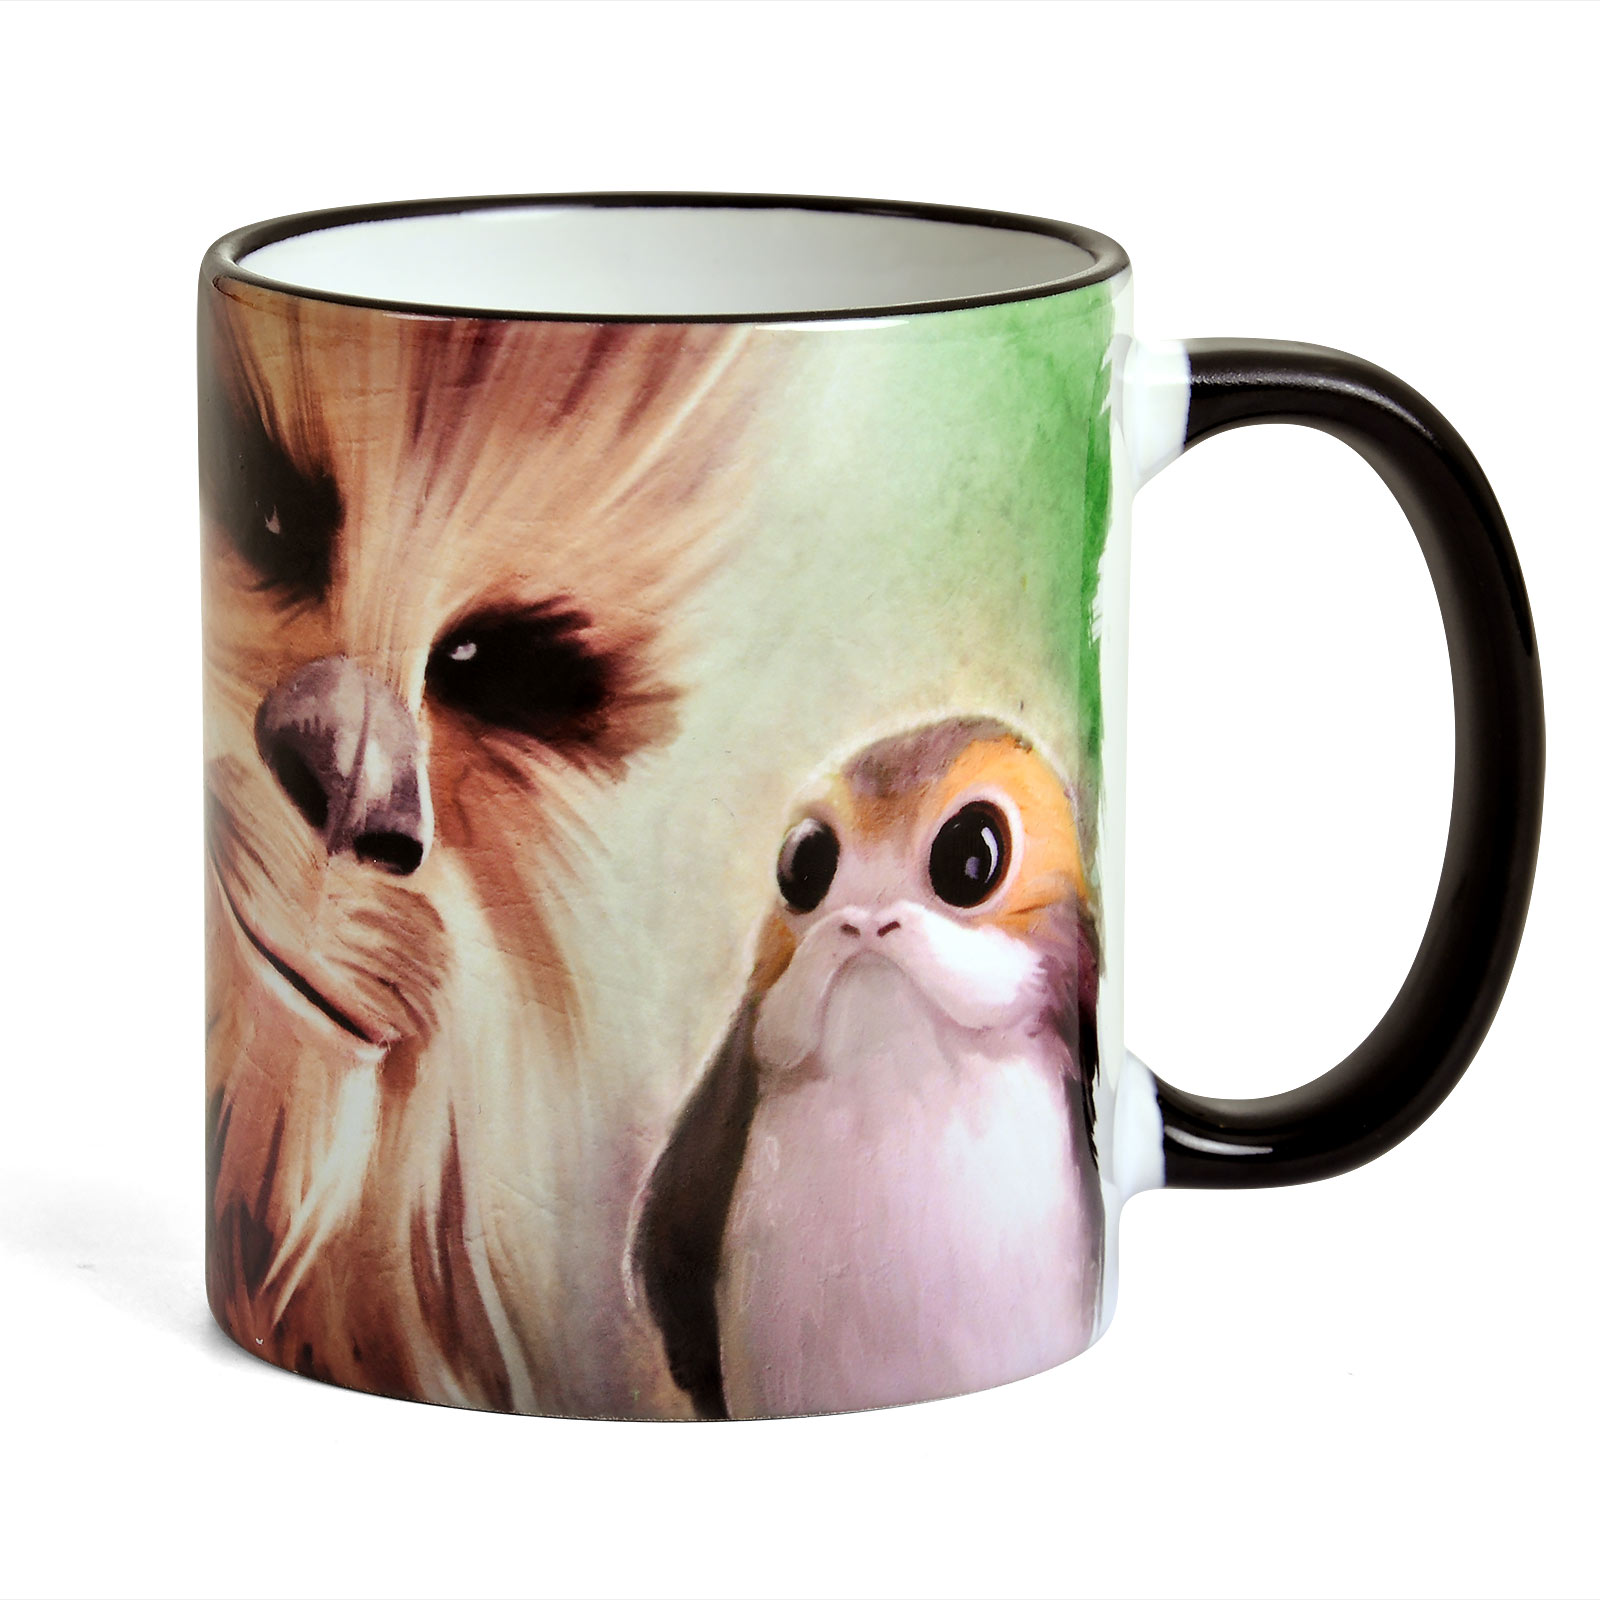 Star Wars - Porgs and Chewie mug